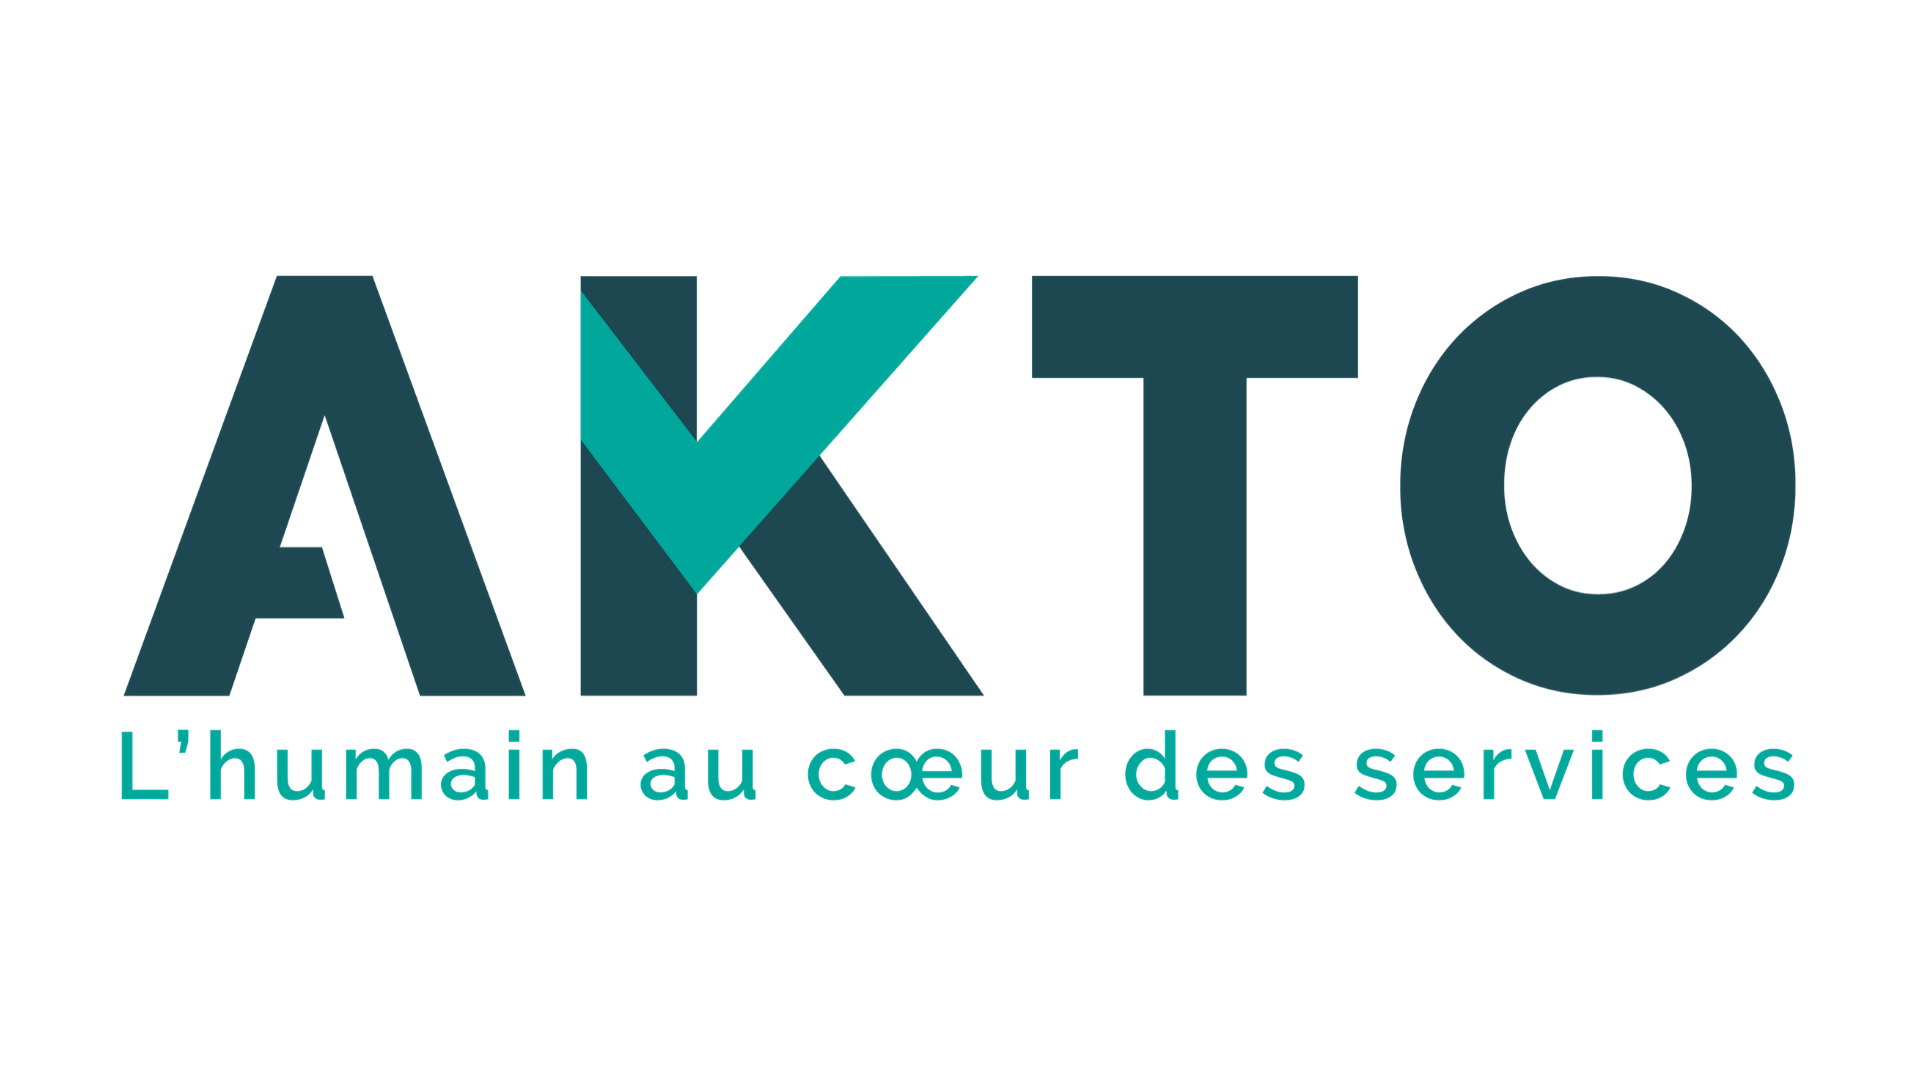 AKTO – Actions Collectives Transverses